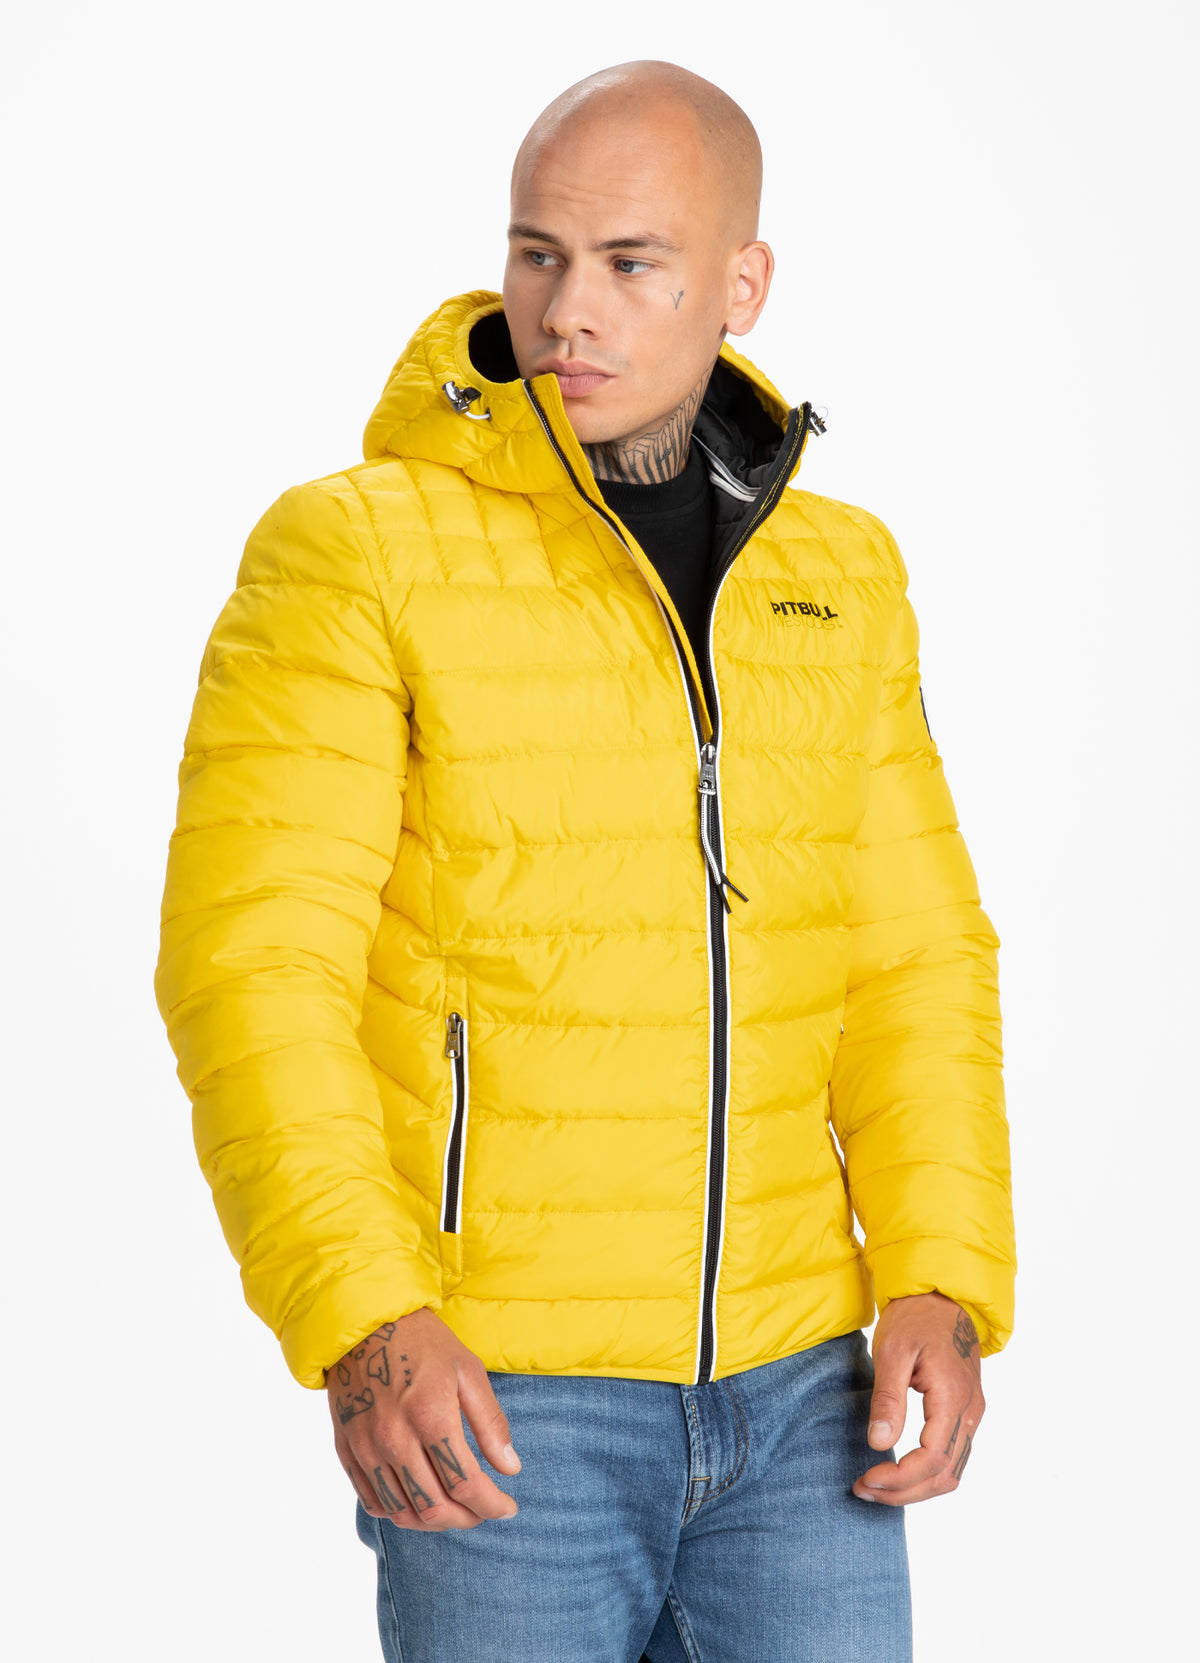 Jacket SEACOAST II Yellow - Pitbull West Coast International Store 